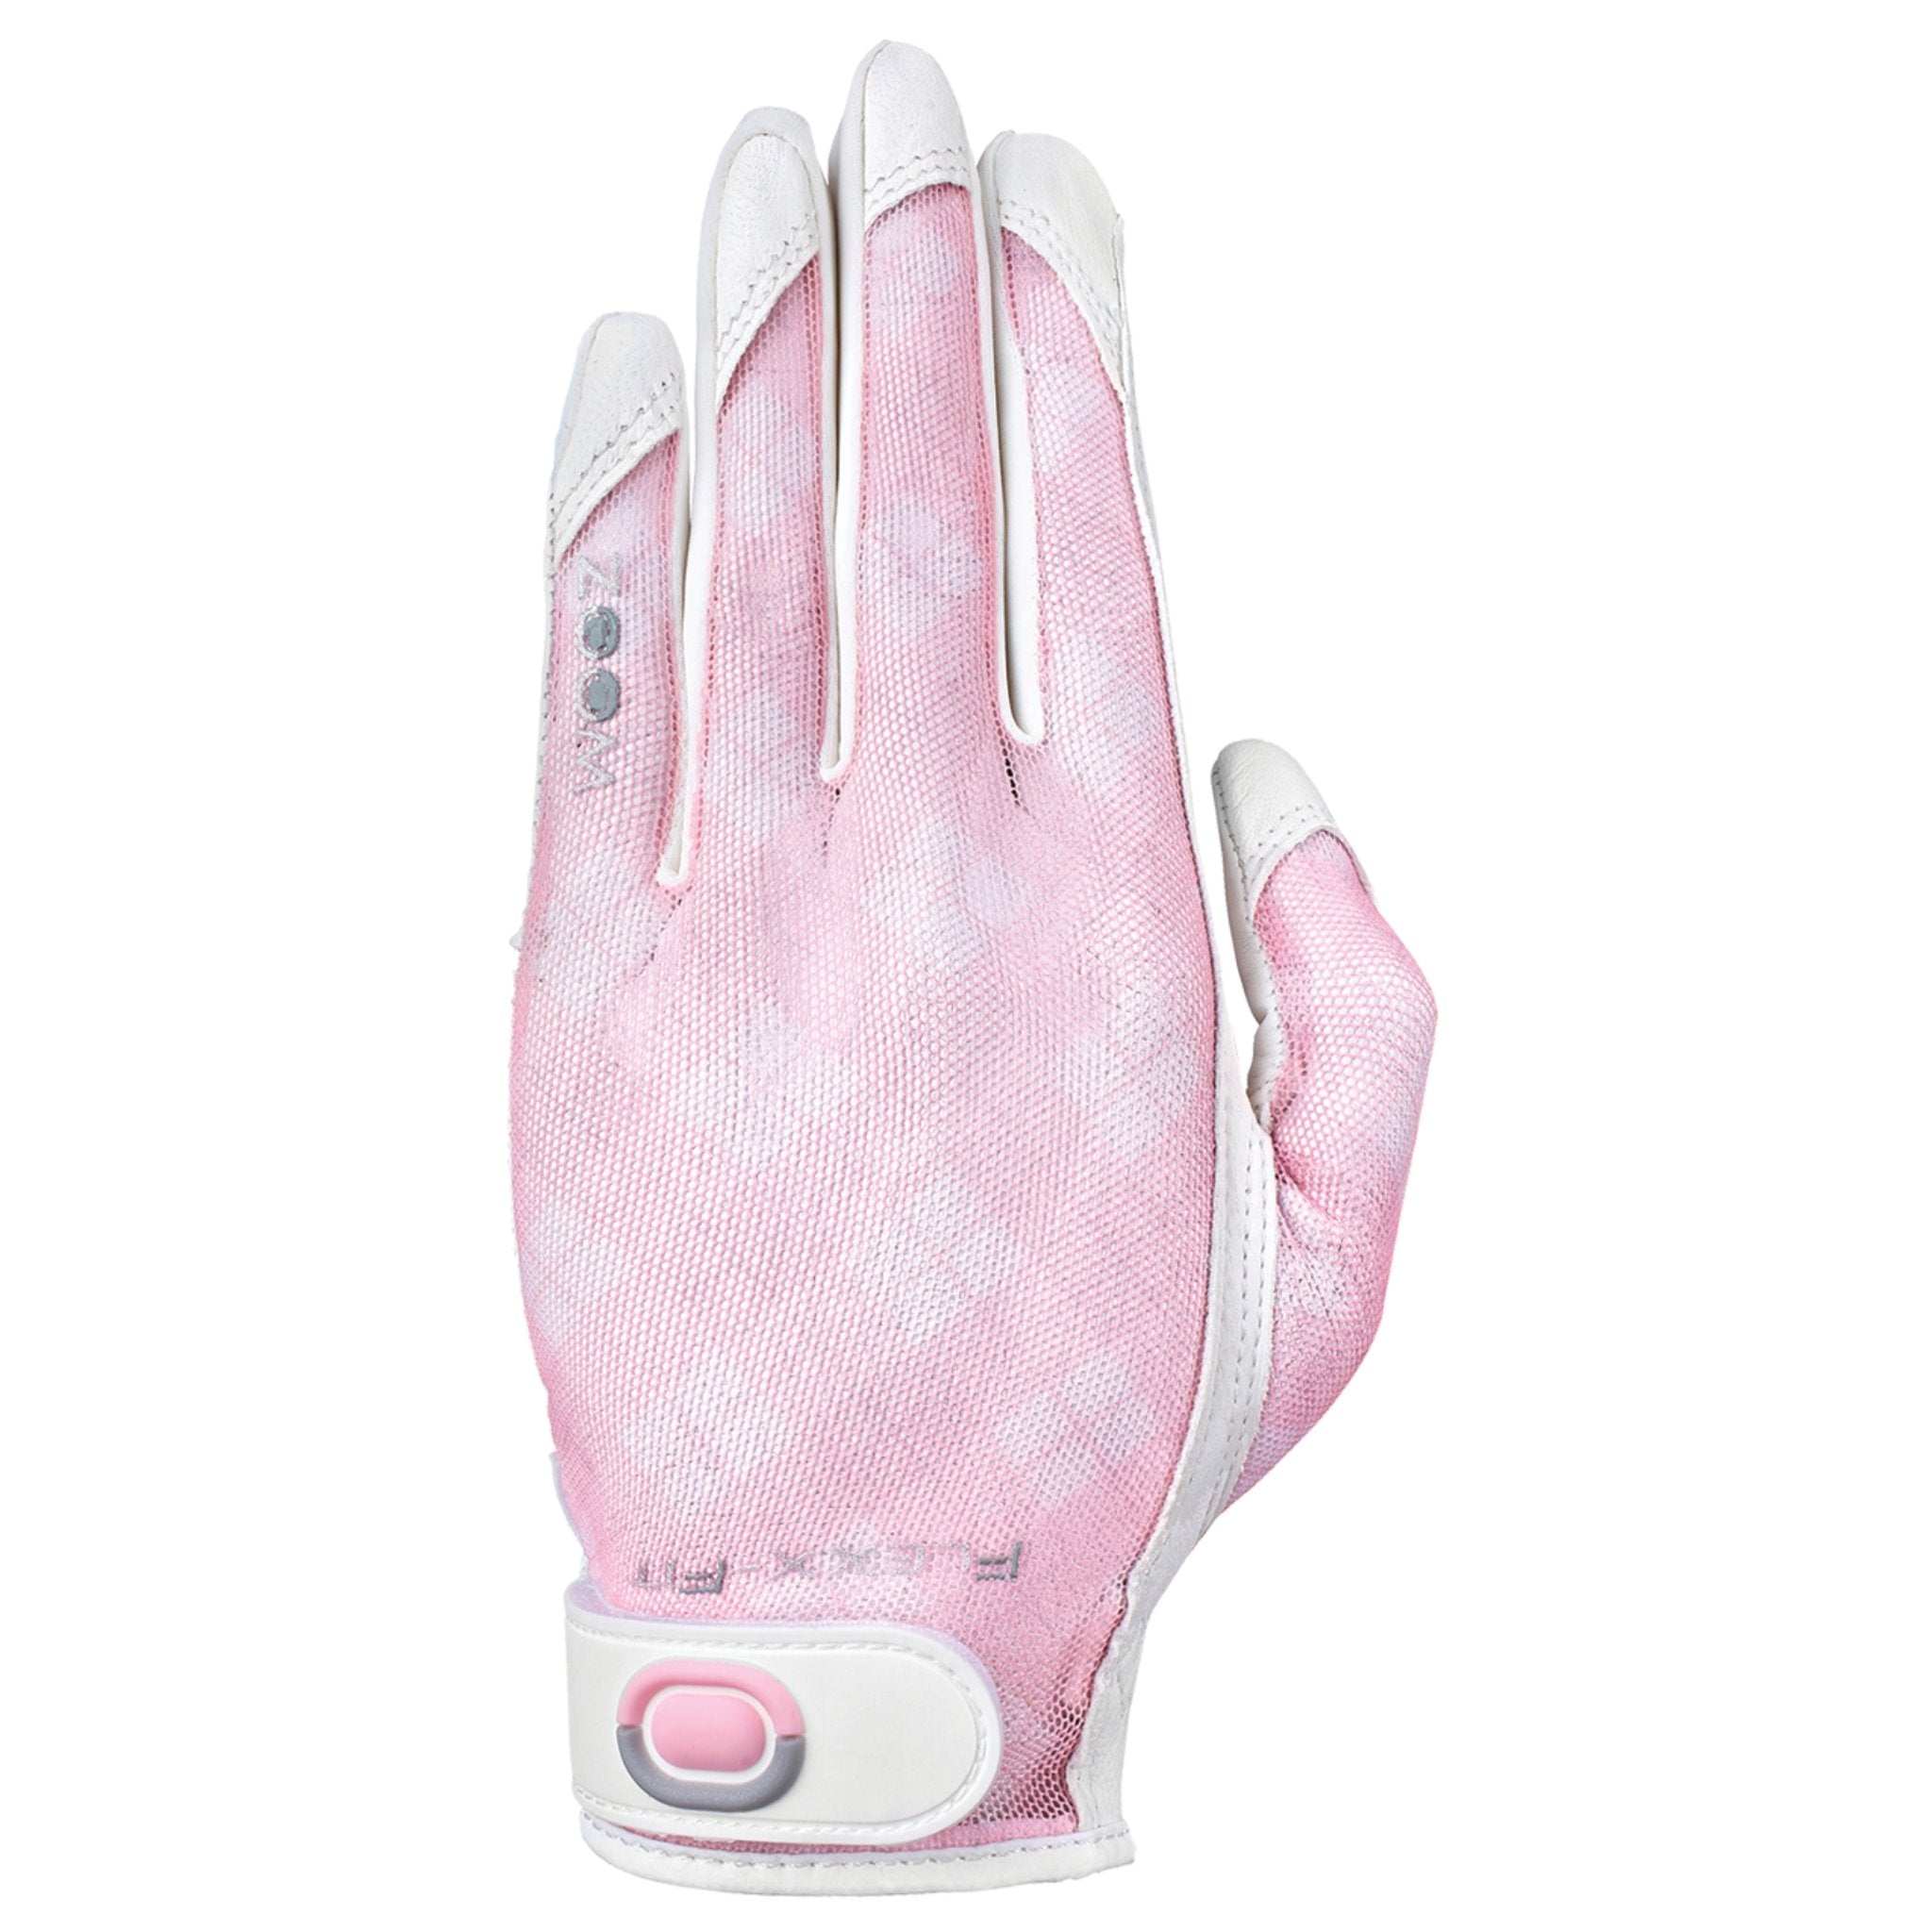 Sun Style Zoom Glove - Vichy Light Pink (LH) - Fairway Fittings